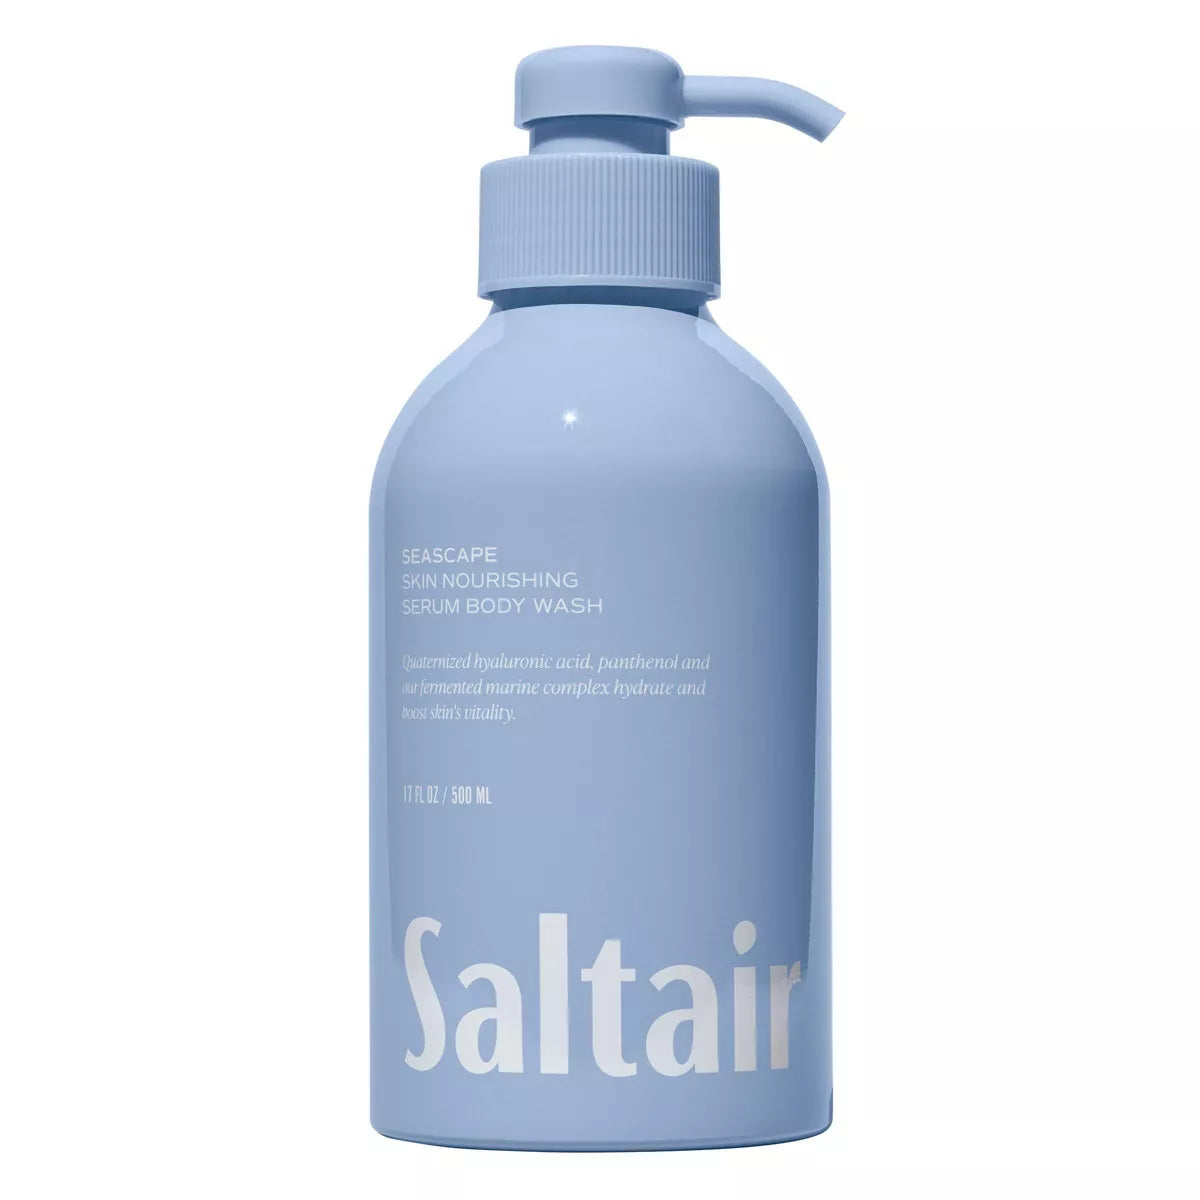 Saltair Seascape Serum Body Wash - Clean Breeze Scent - (17 fl oz)